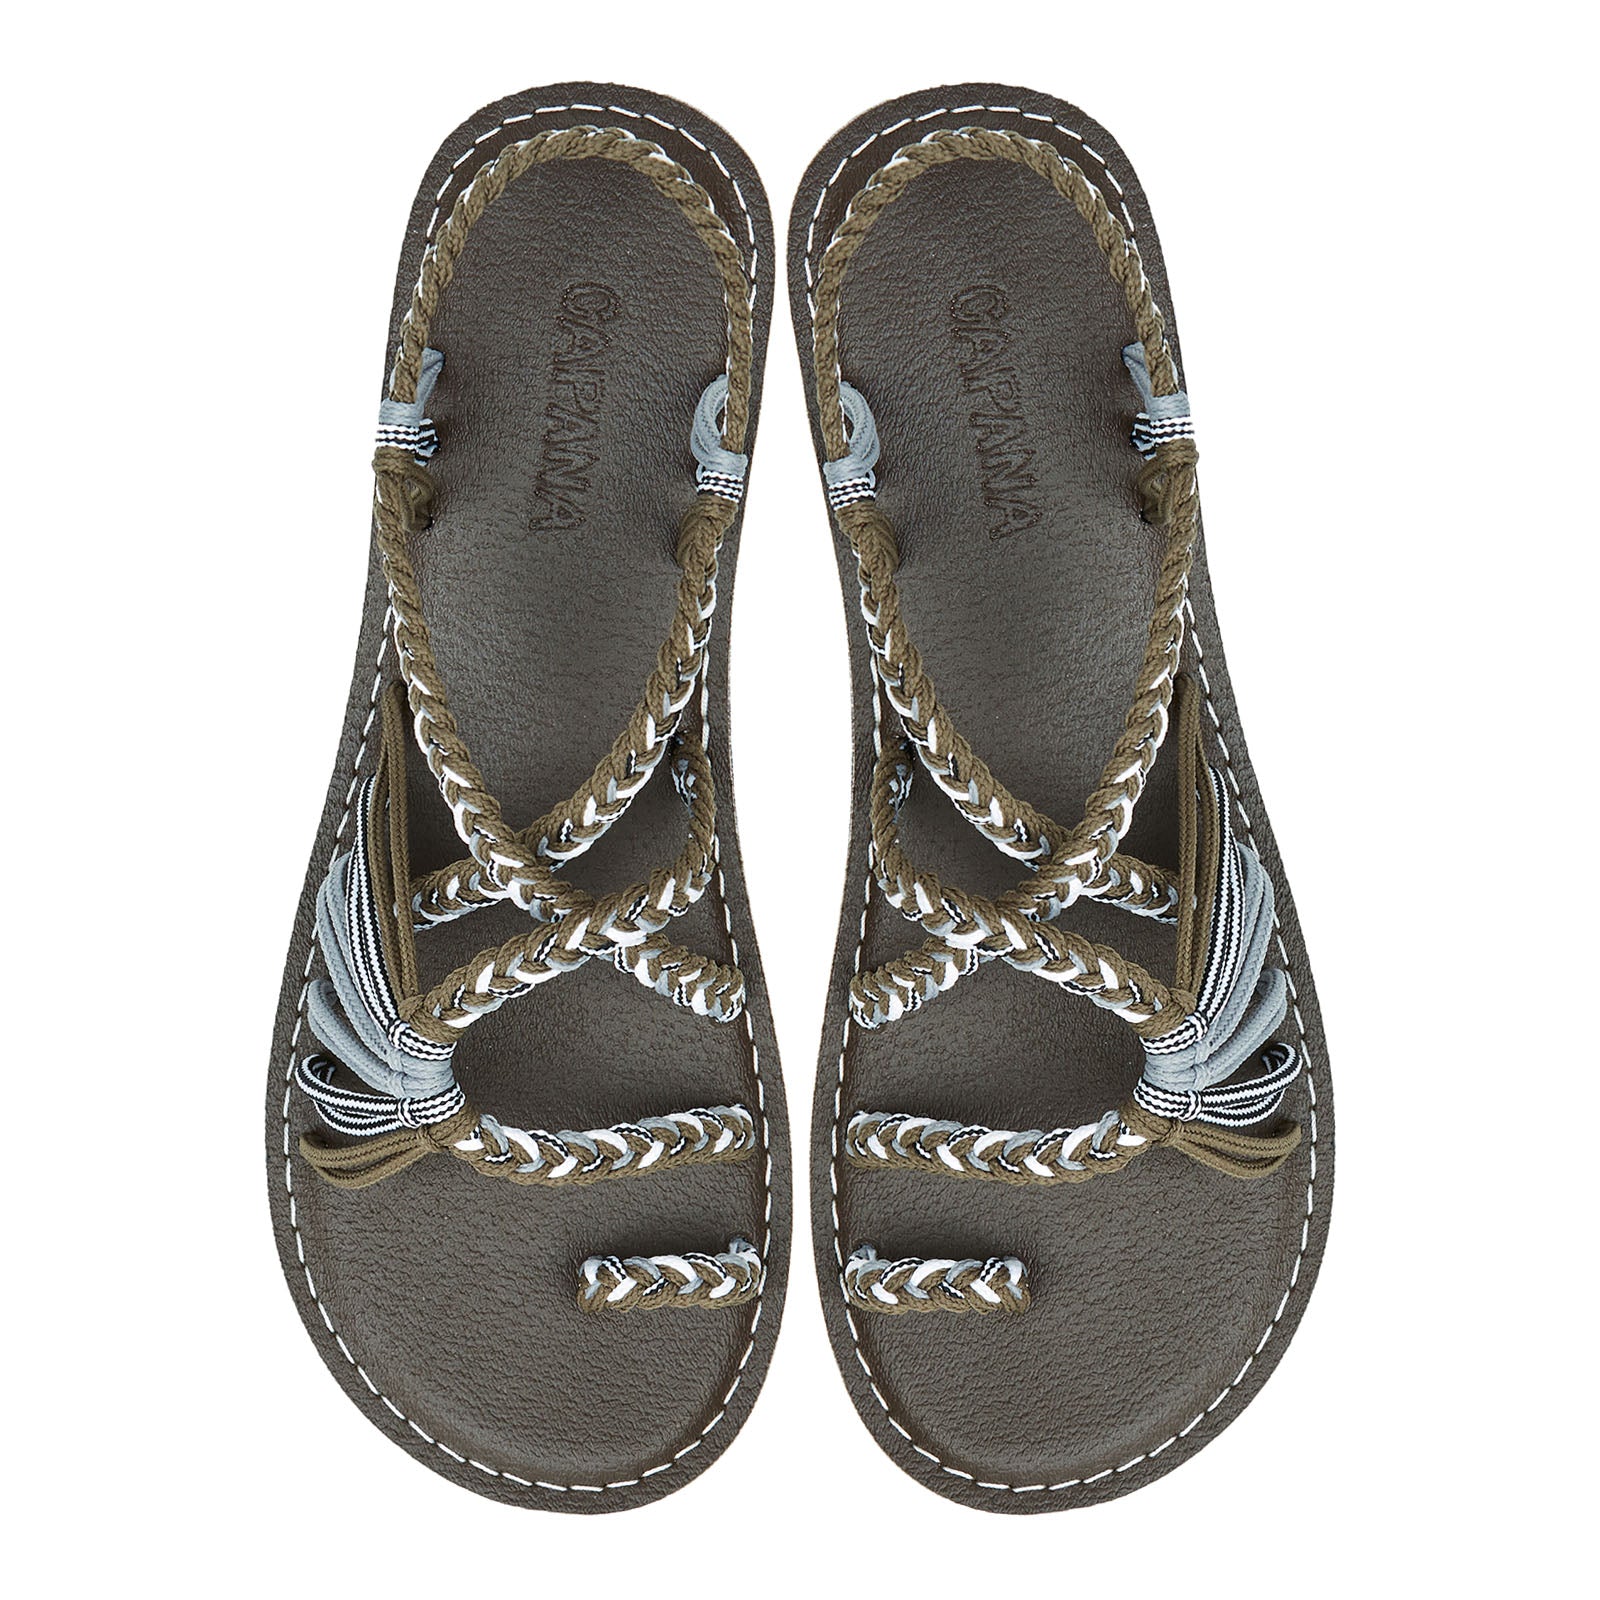 Commune Classic Porpoise Rope Sandals Gray loop design Flat sandals for women